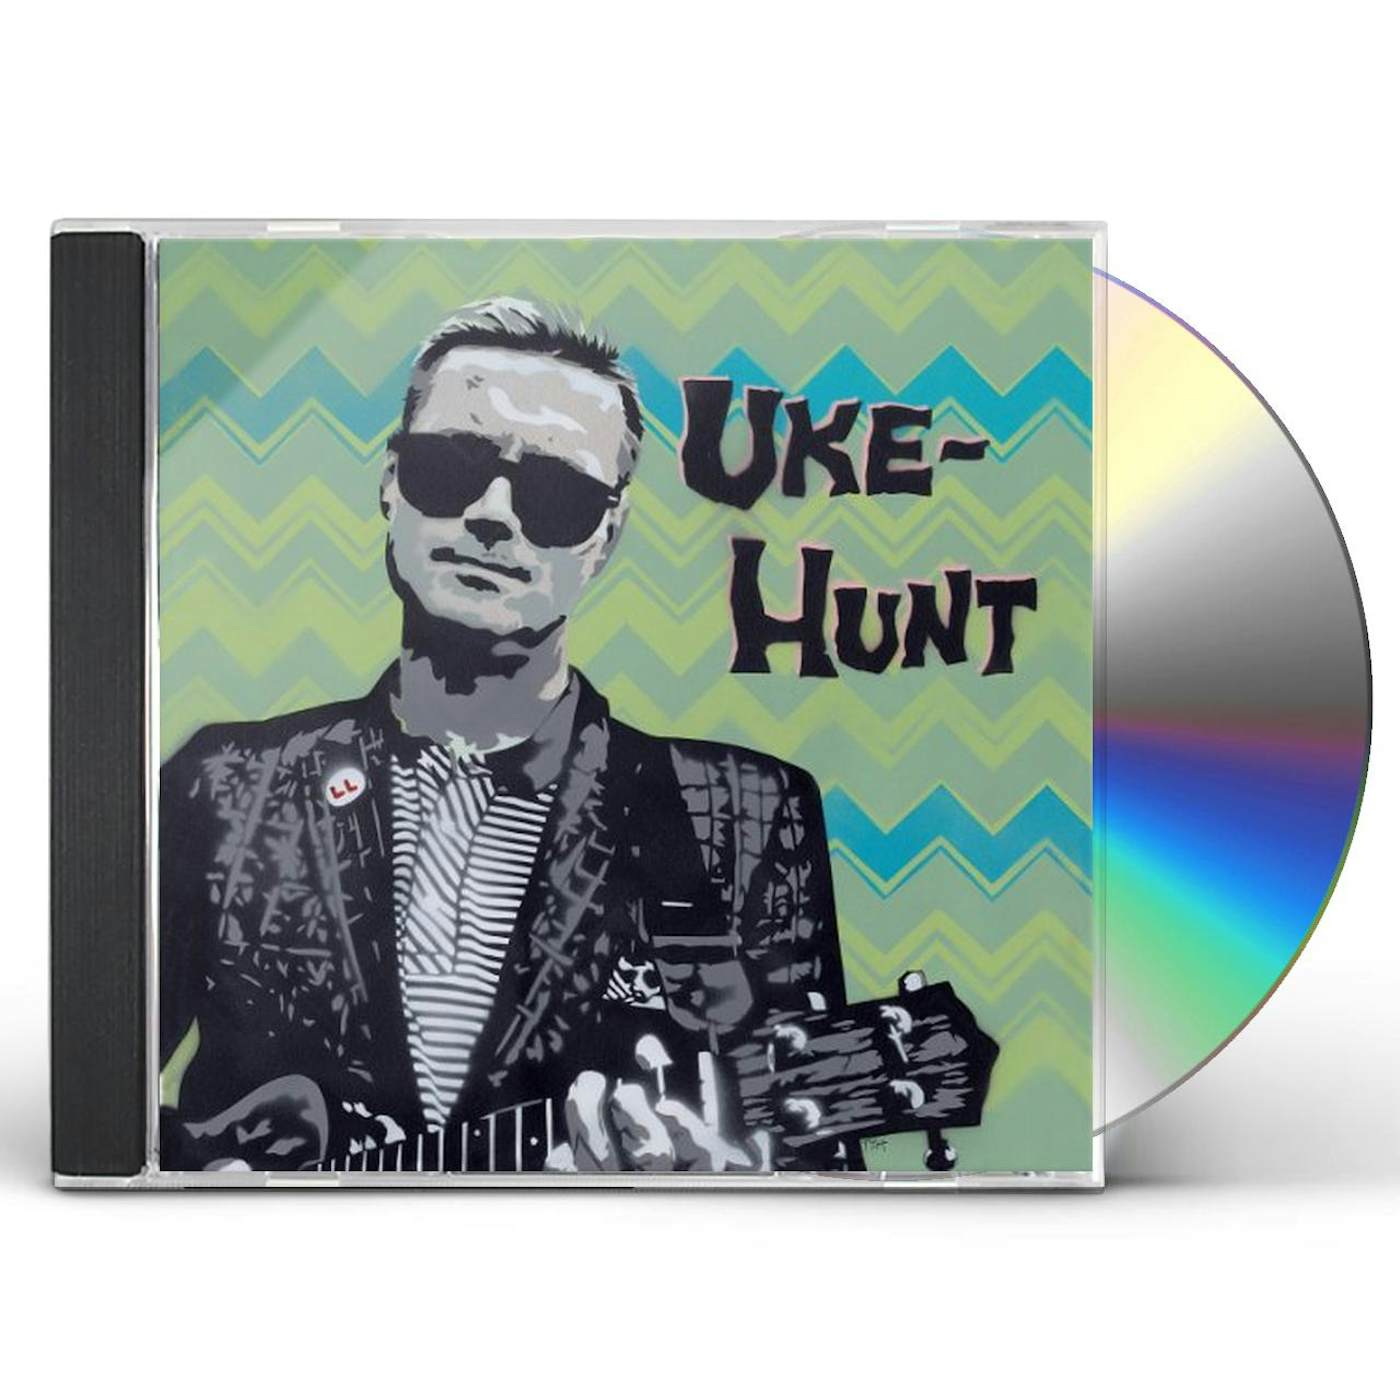 UKE-HUNT CD